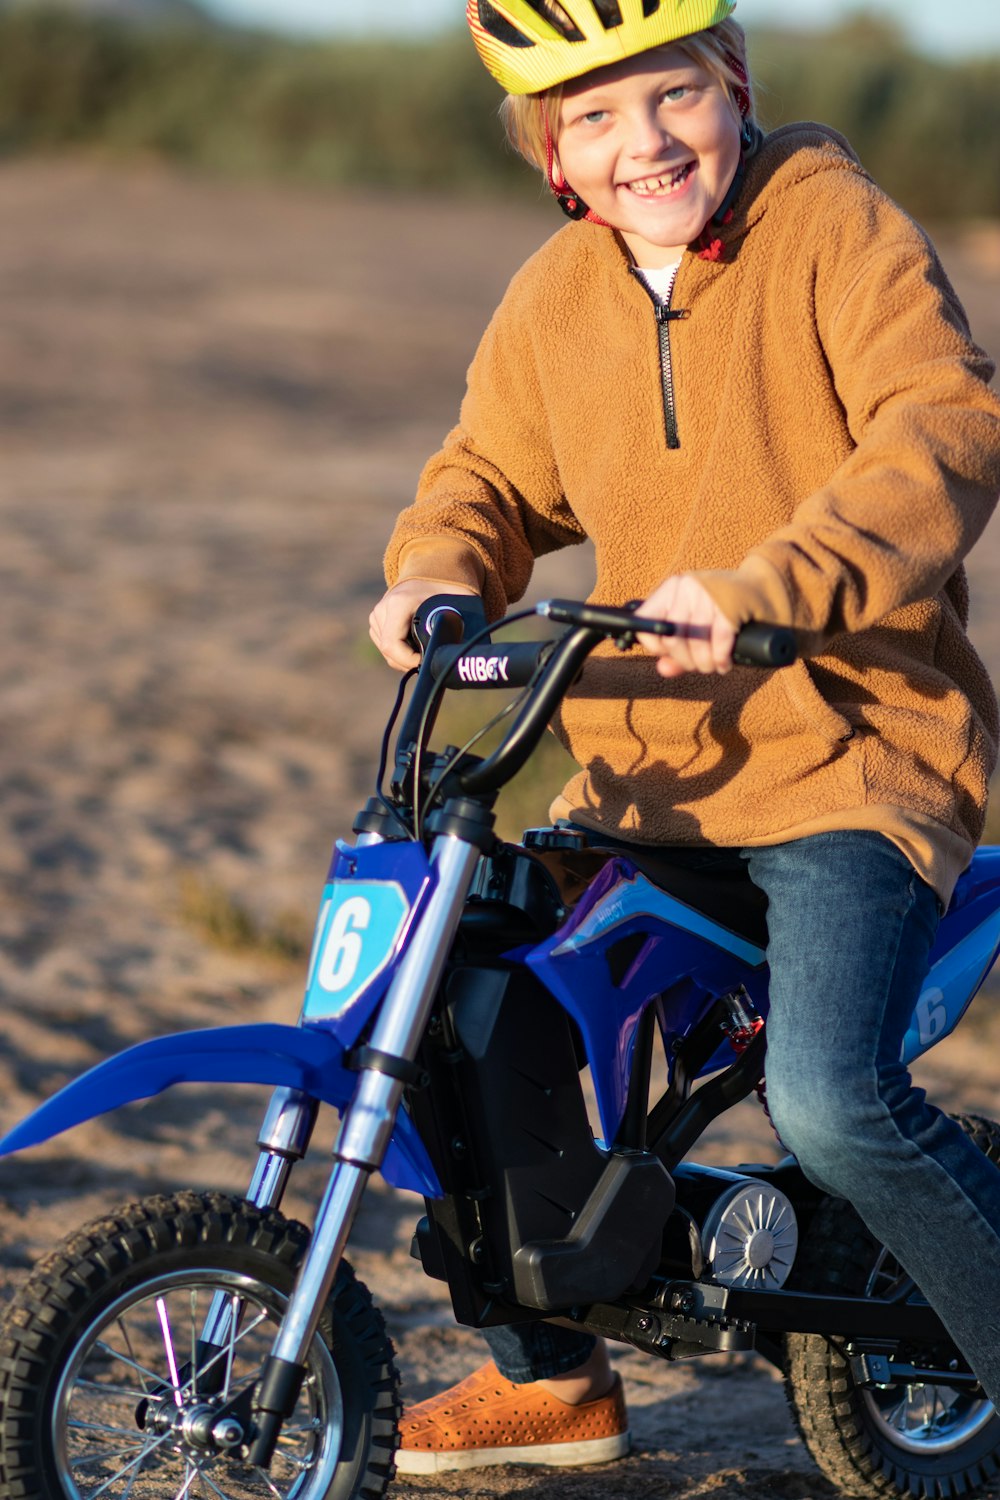 a young boy riding a small blue bike